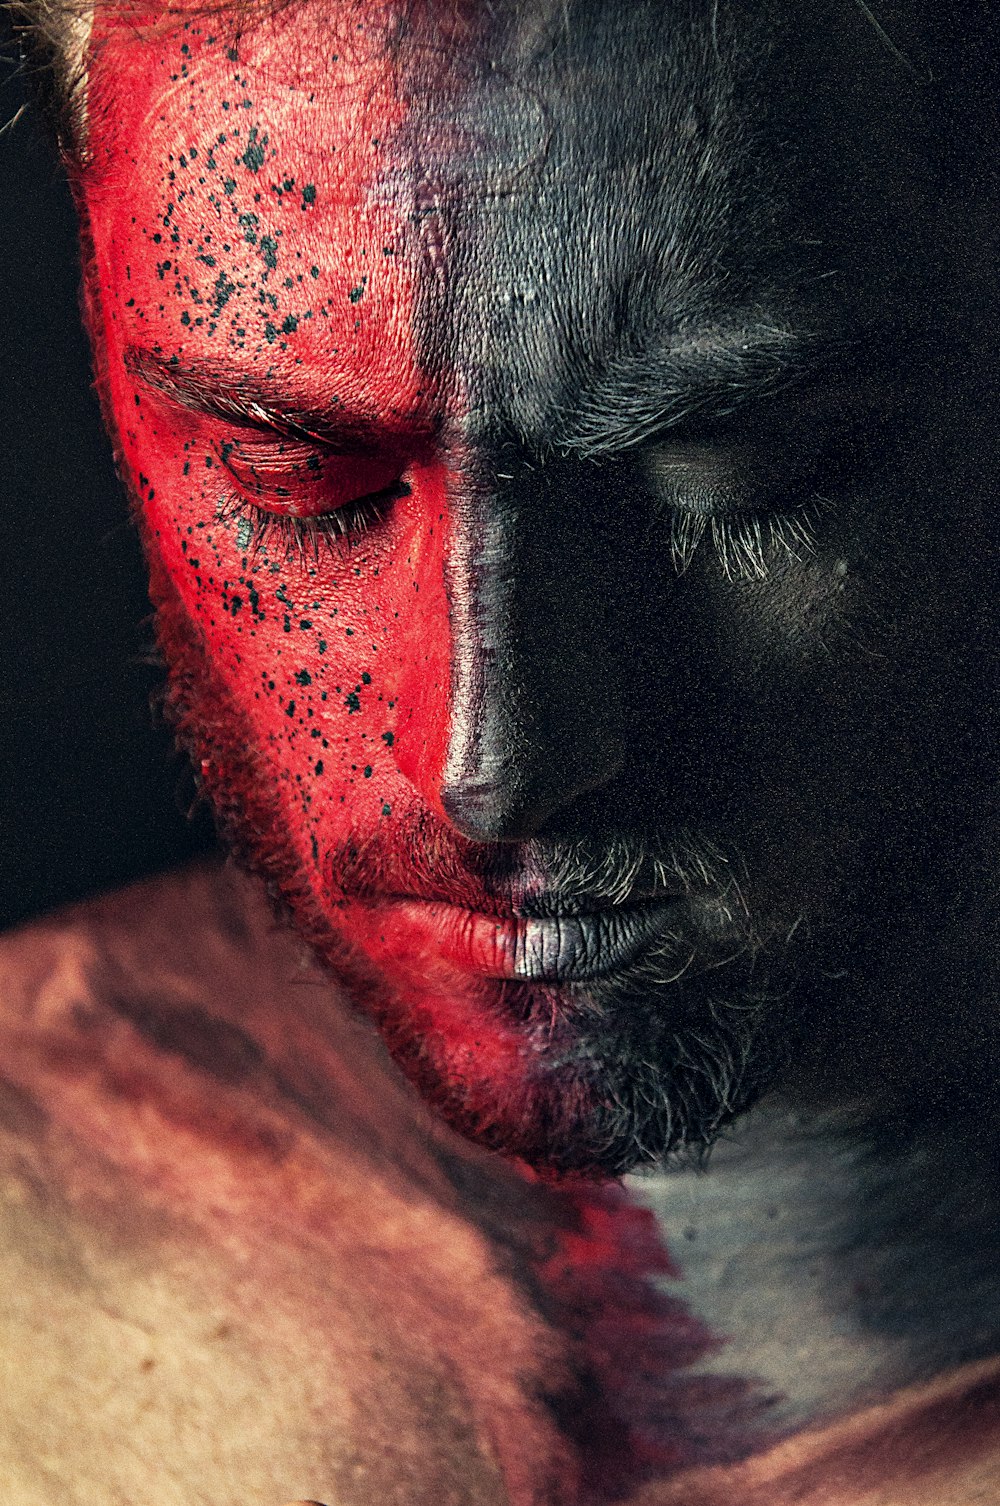 man portrait red and black paint